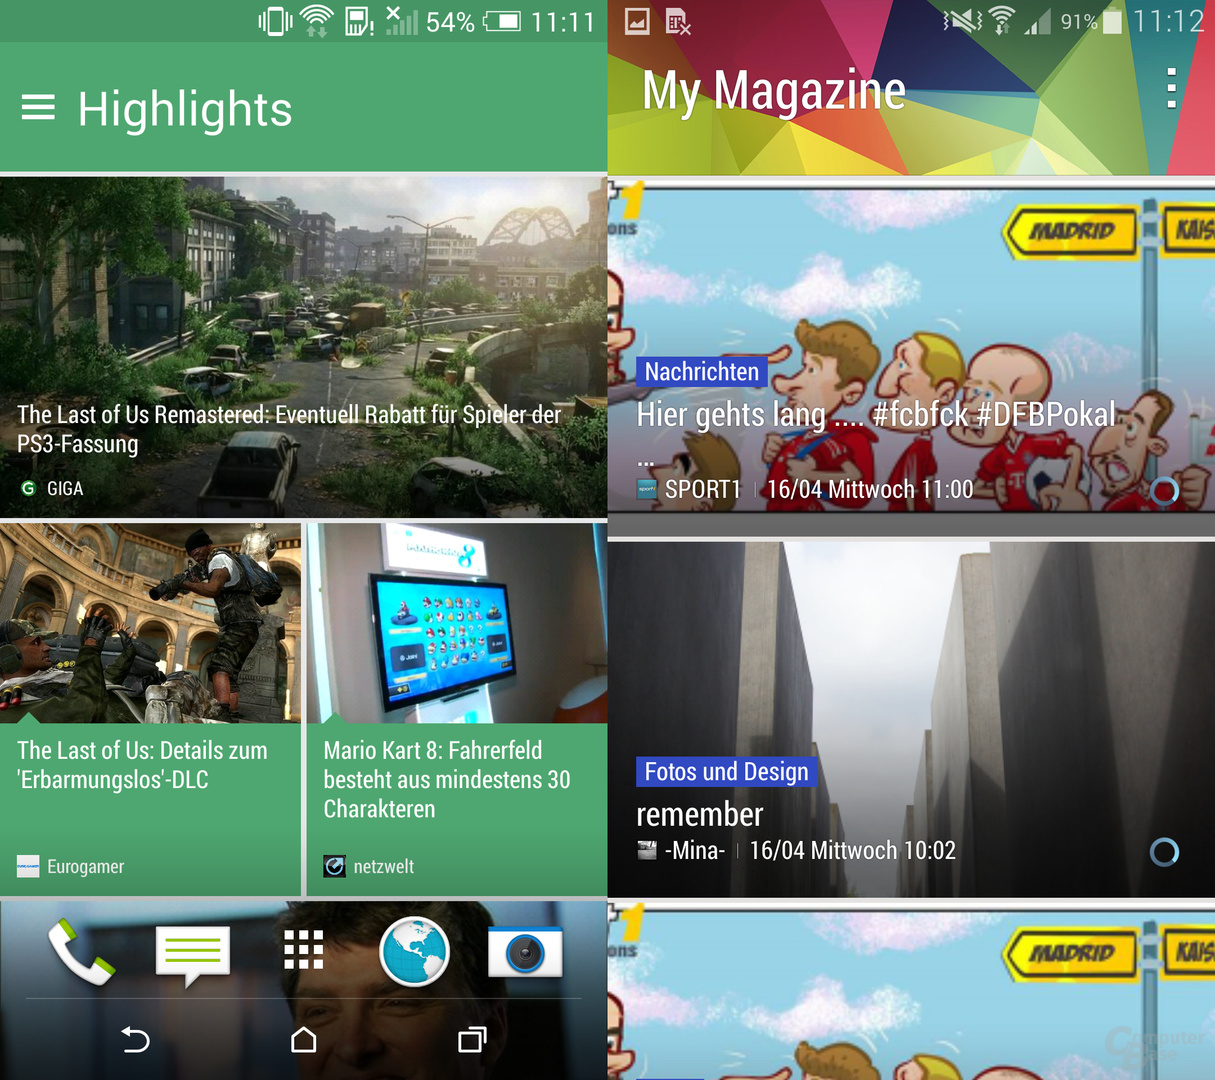 HTC One (M8) & Samsung Galaxy S5: Blinkfeed, My Magazine